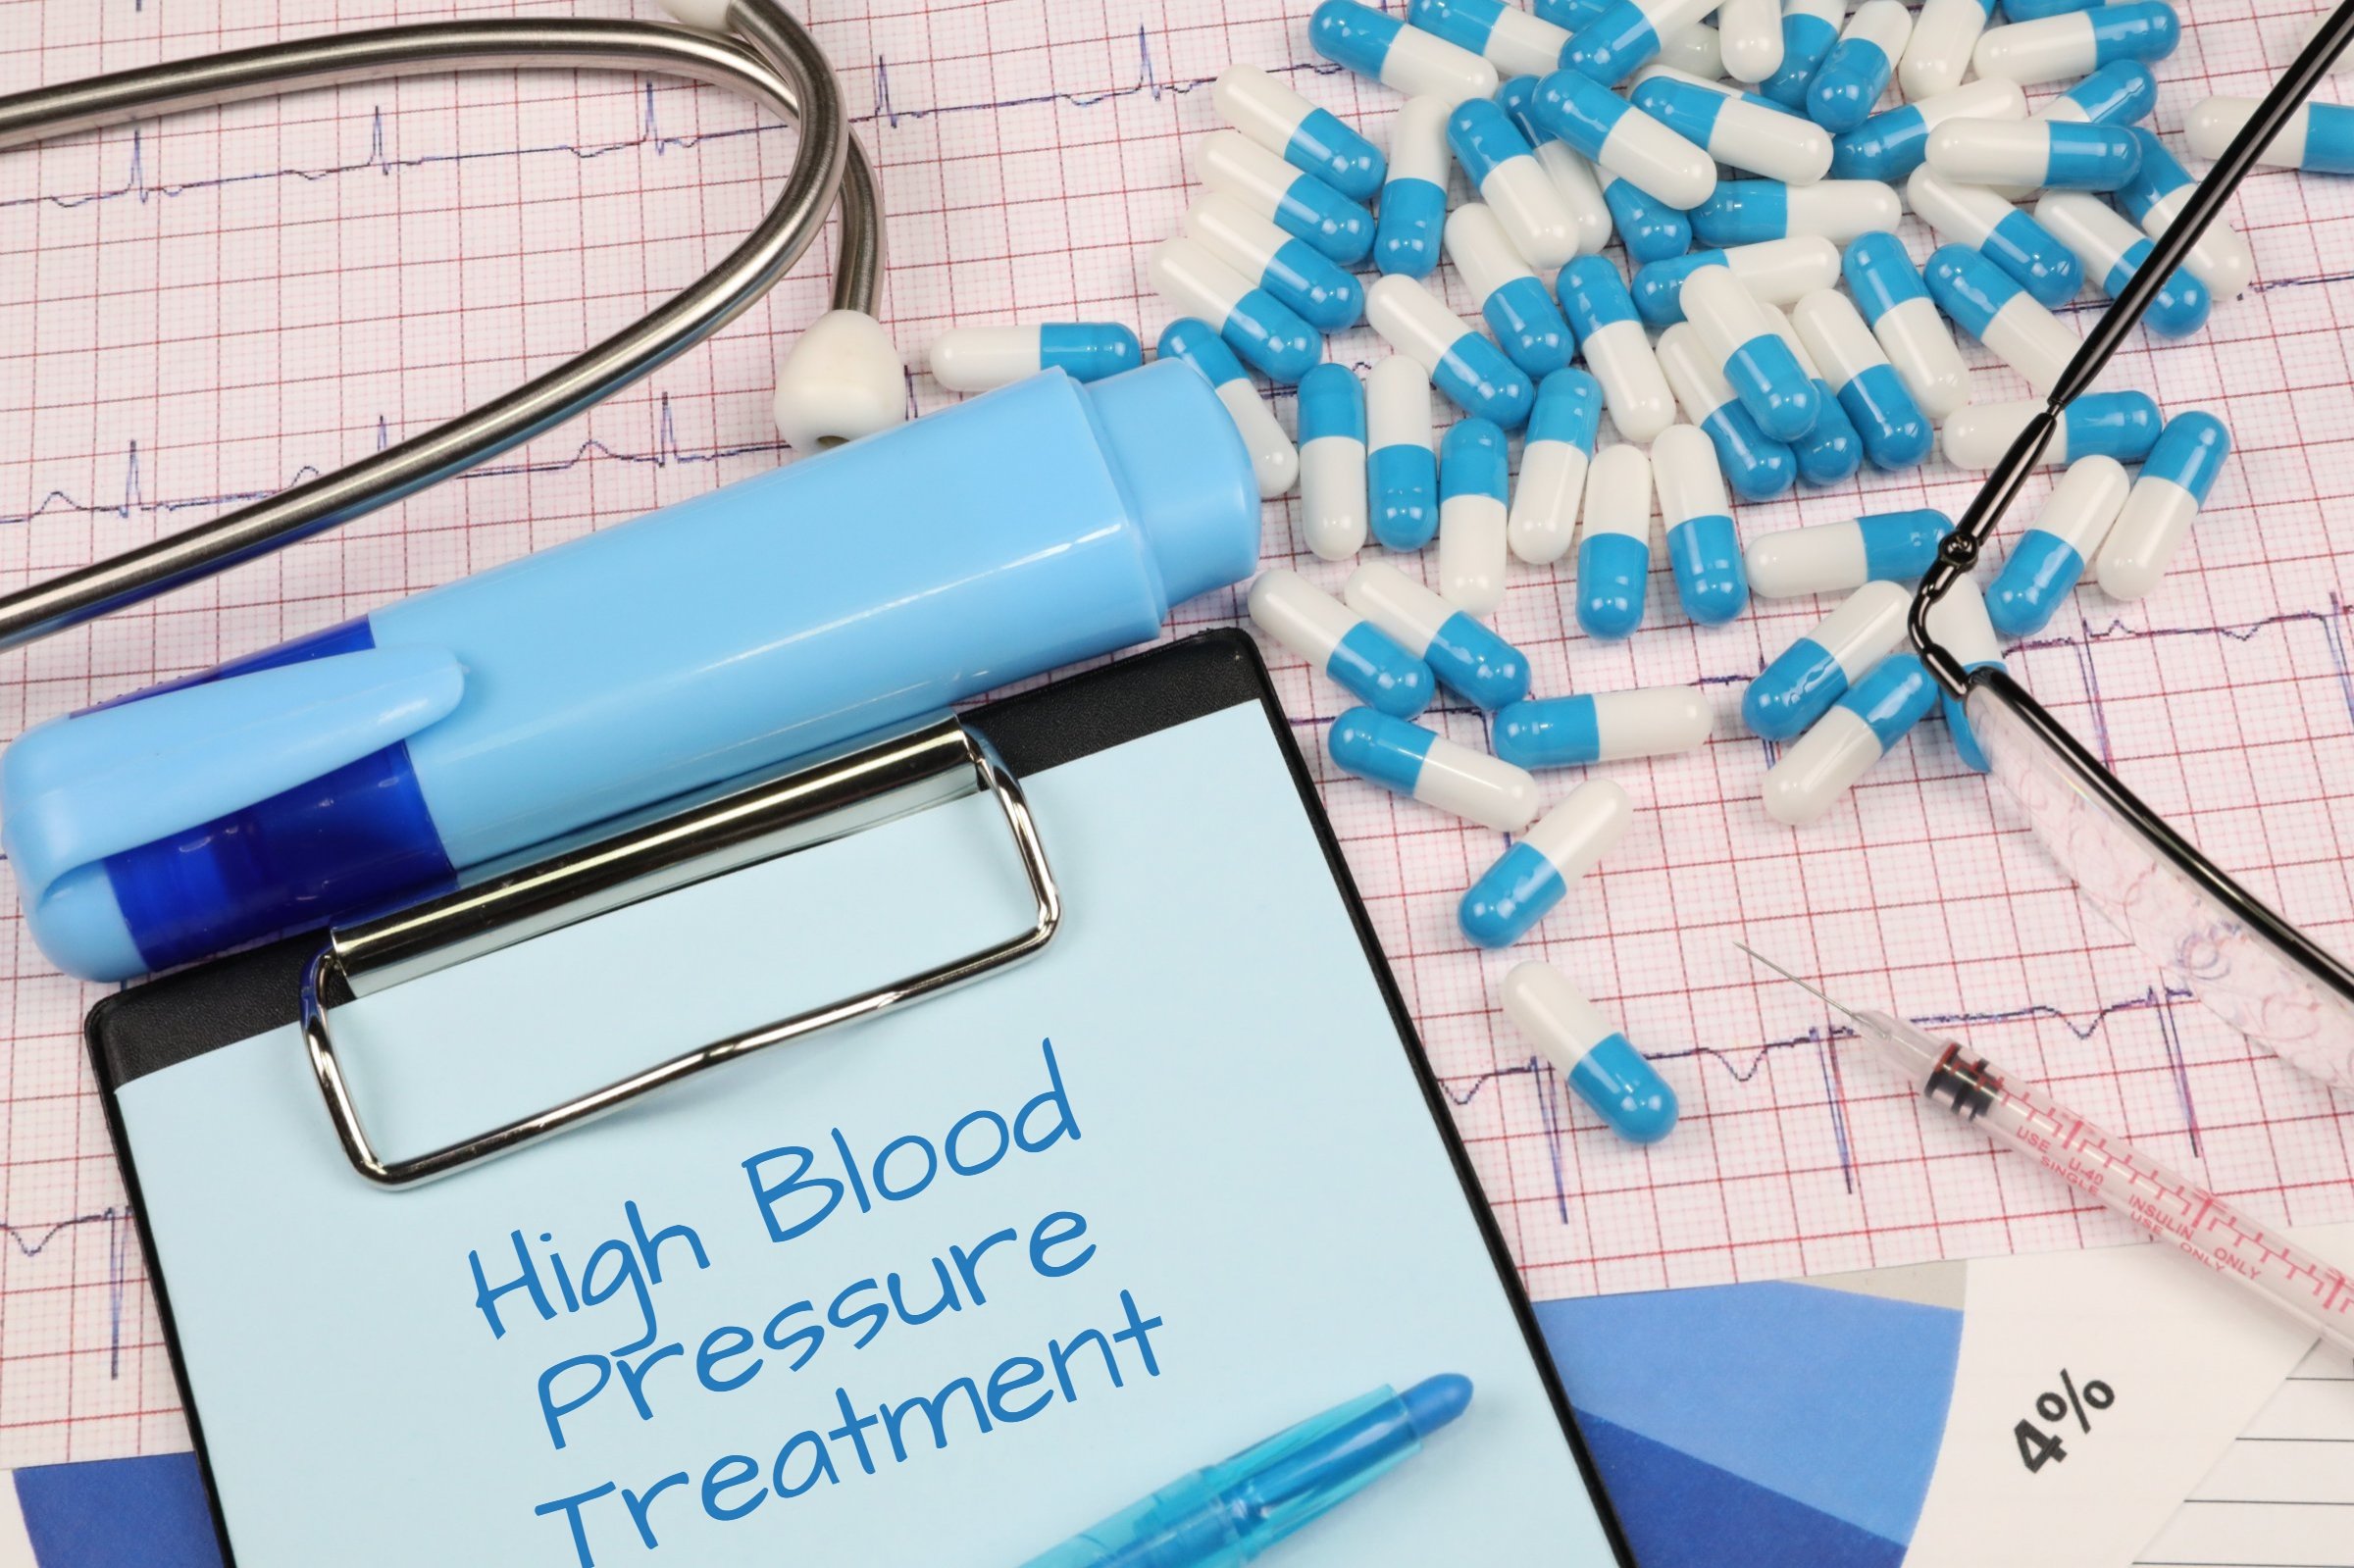 high blood pressure treatment